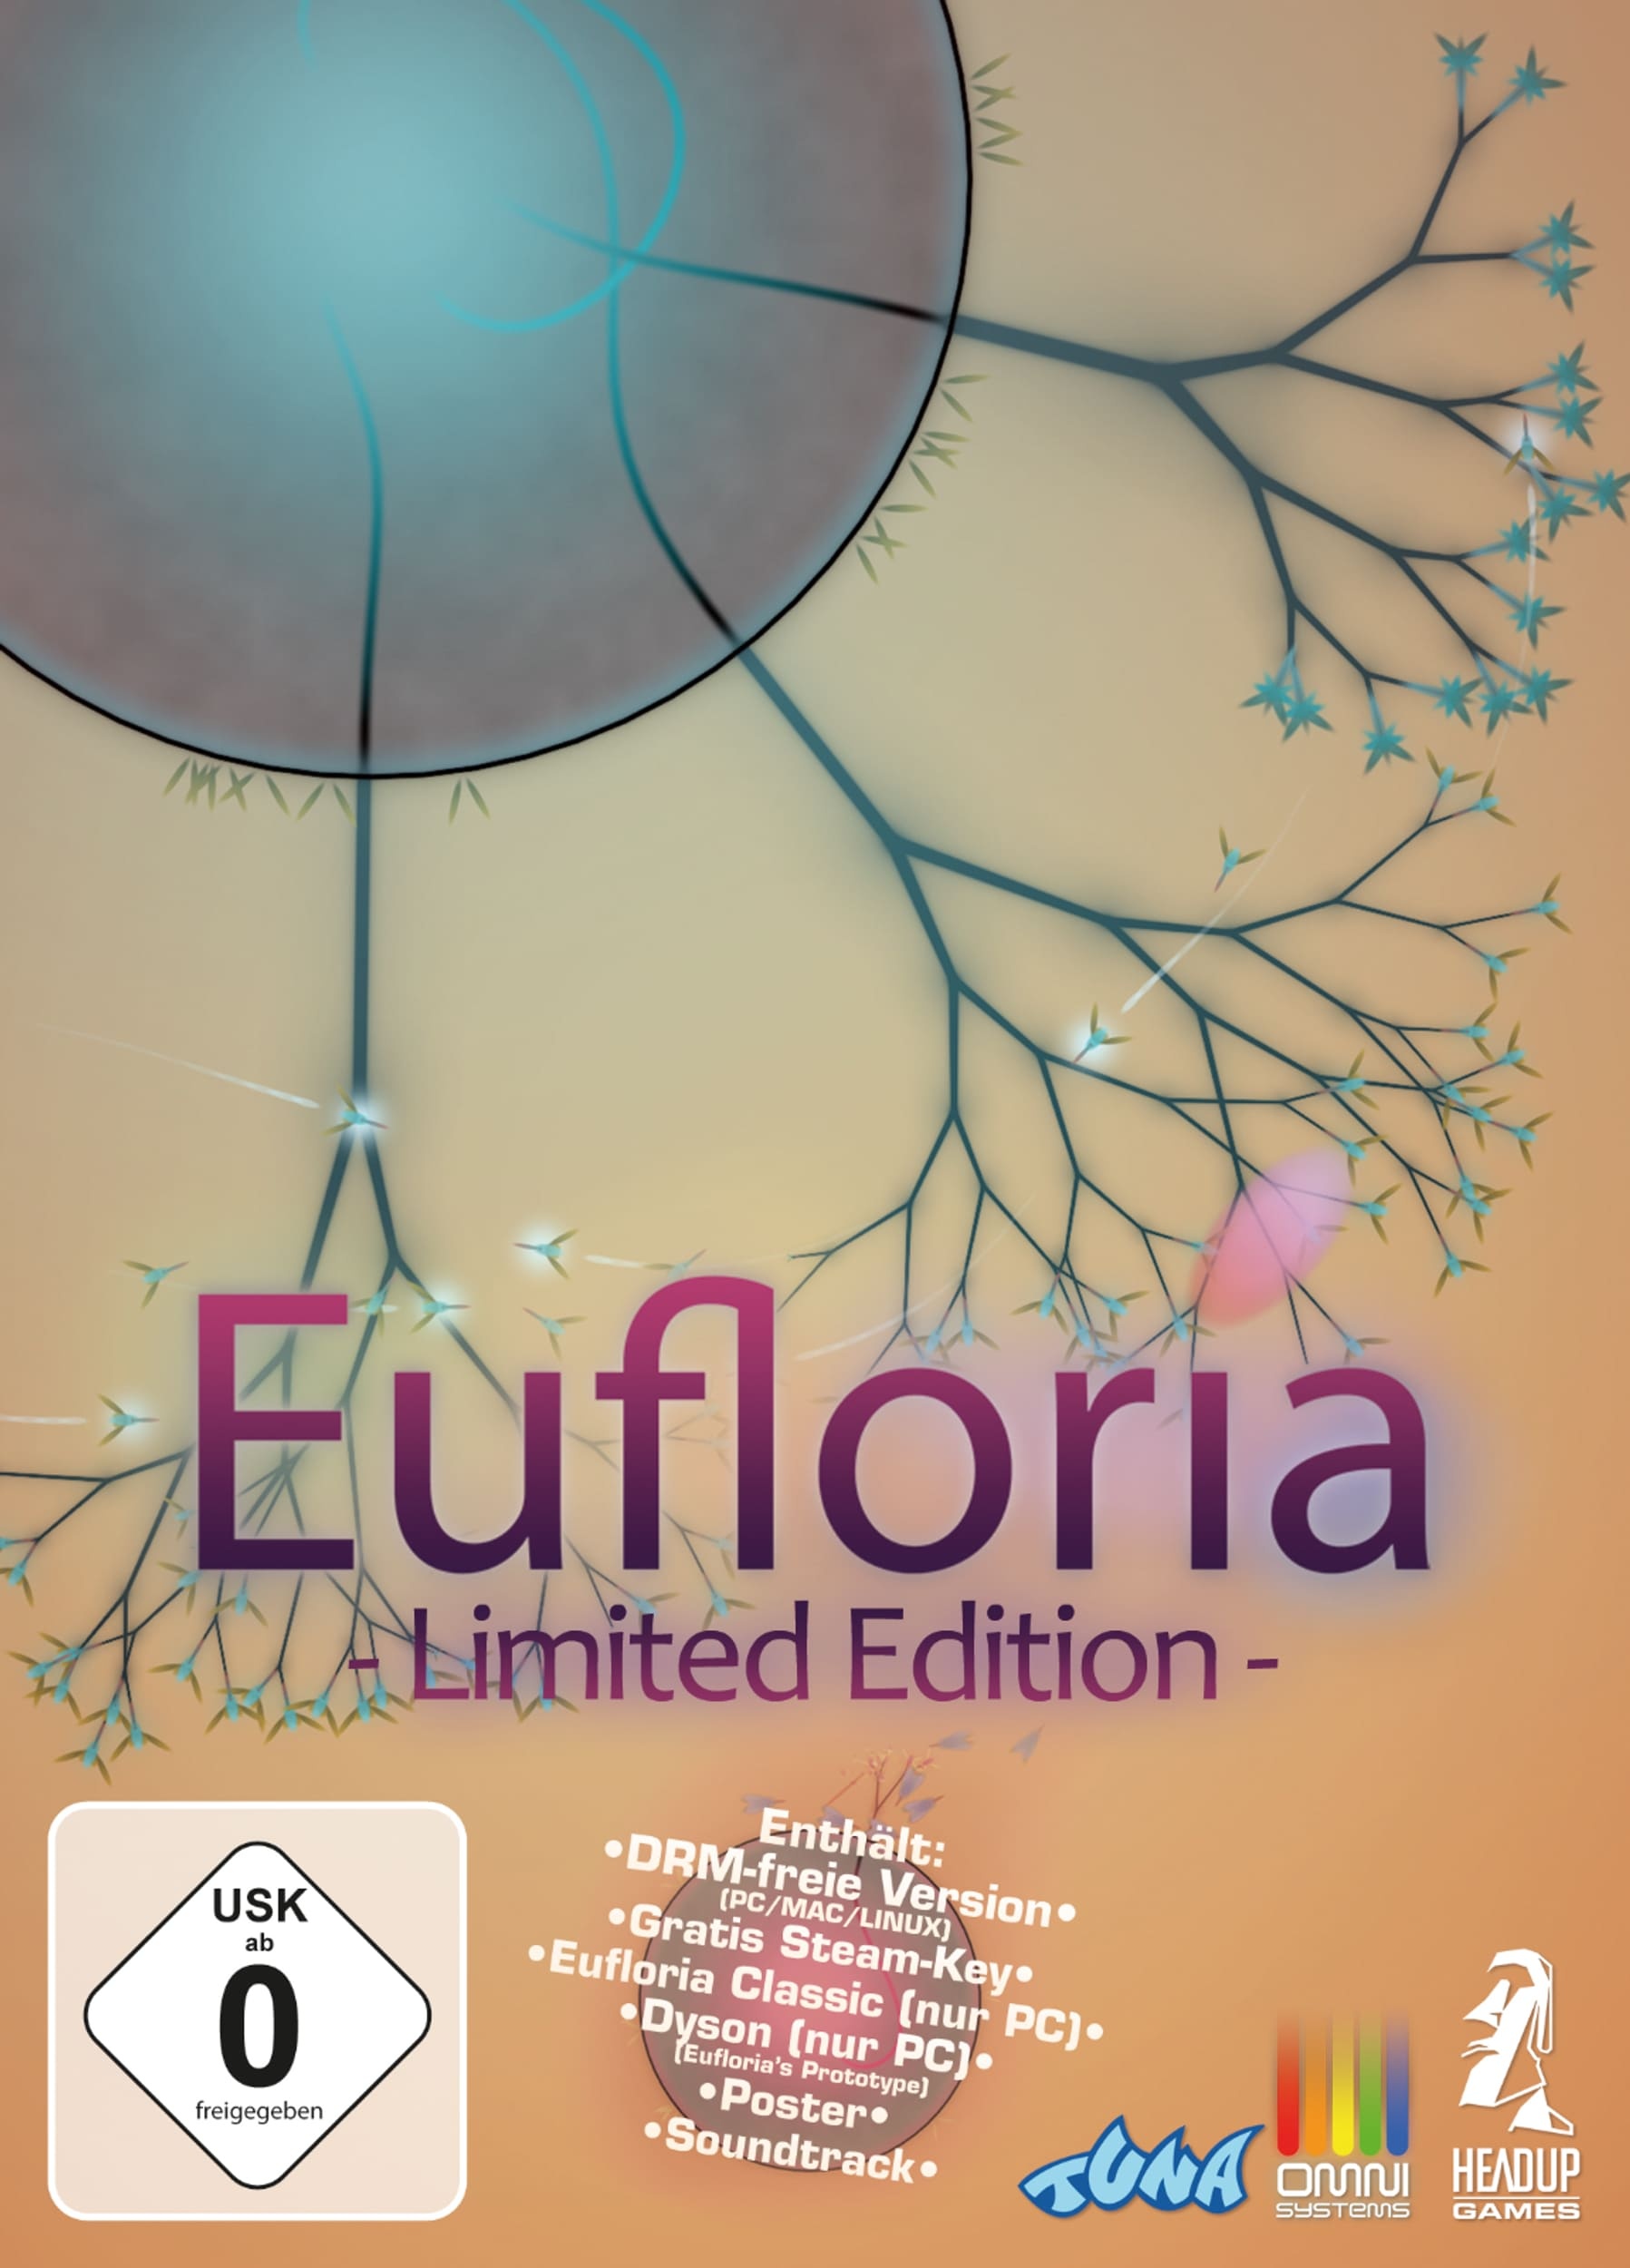 Headup Games, Eufloria - Limited Edition